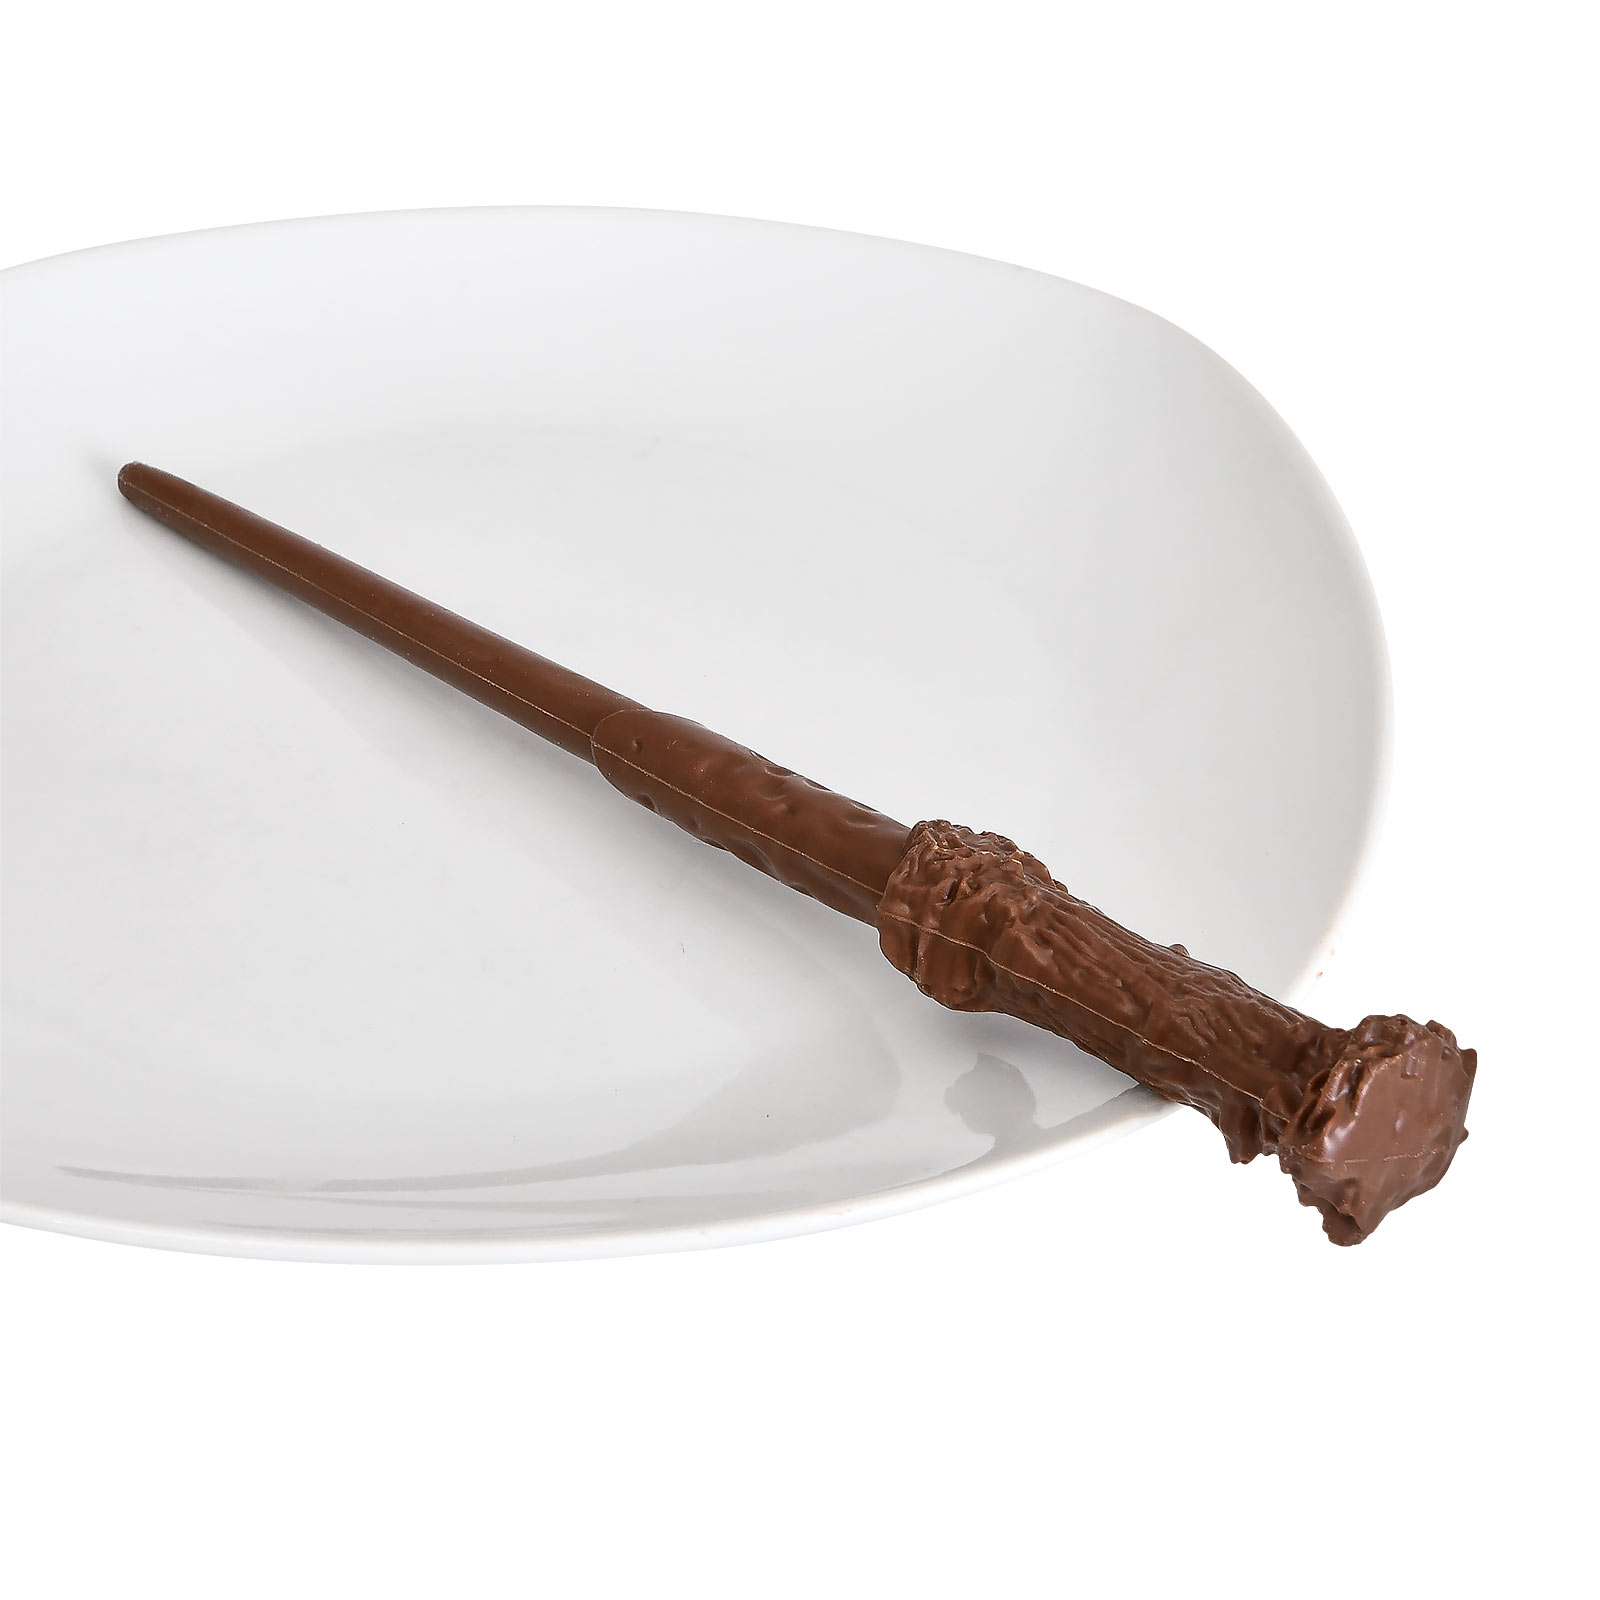 Harry Potter - chocolate wand